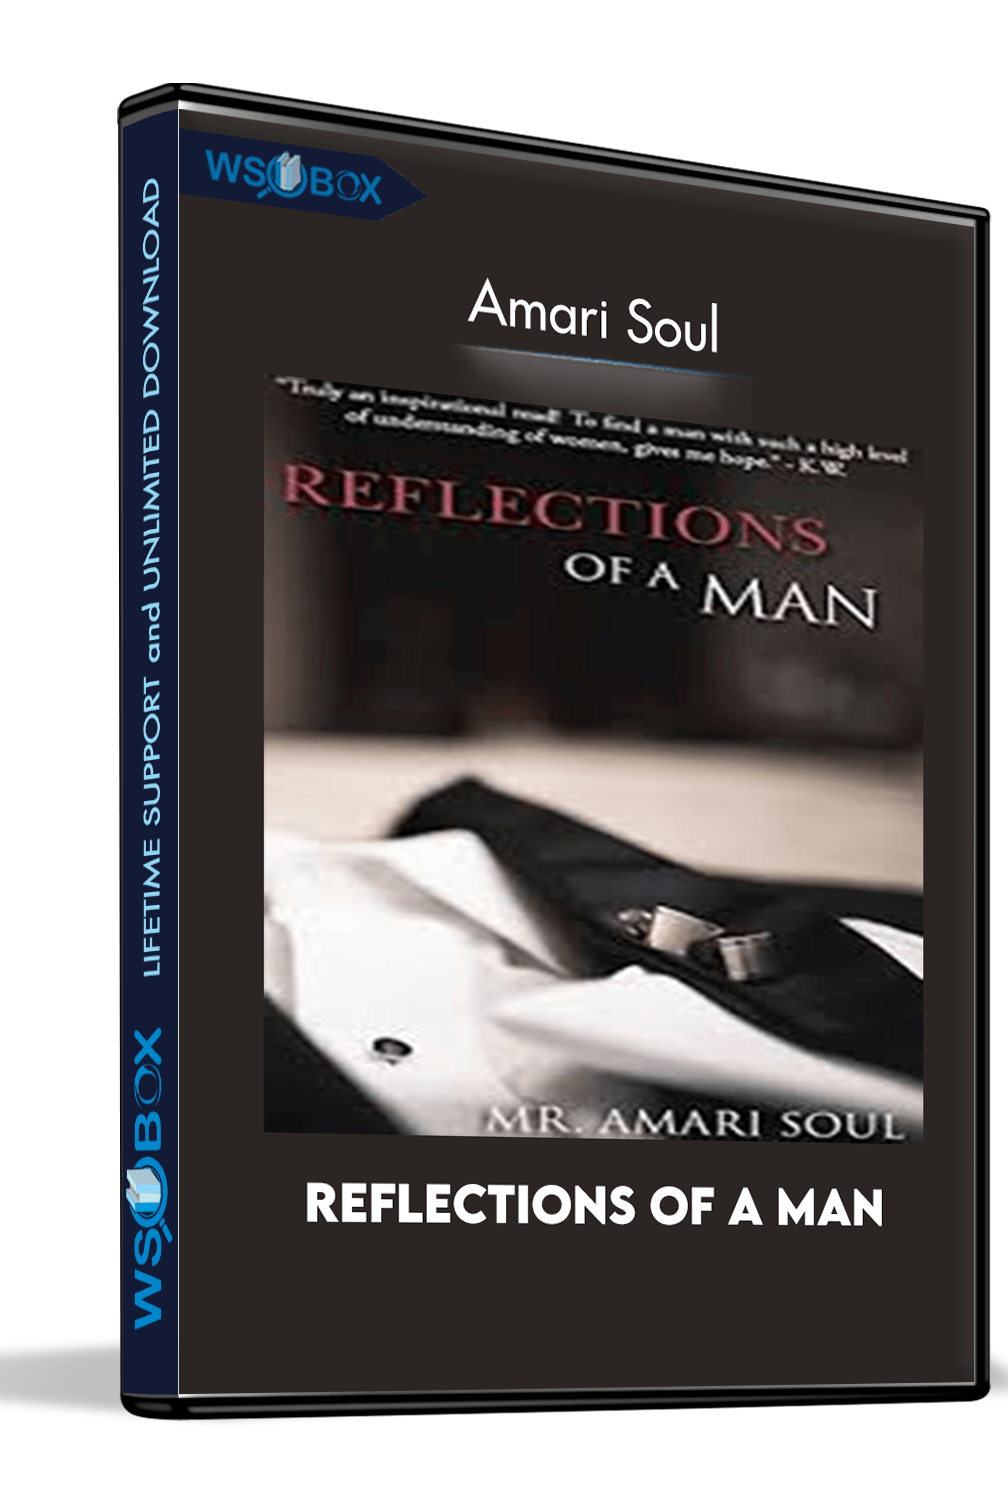 reflections-of-reflections-of-a-man-amari-soula-man-amari-soul